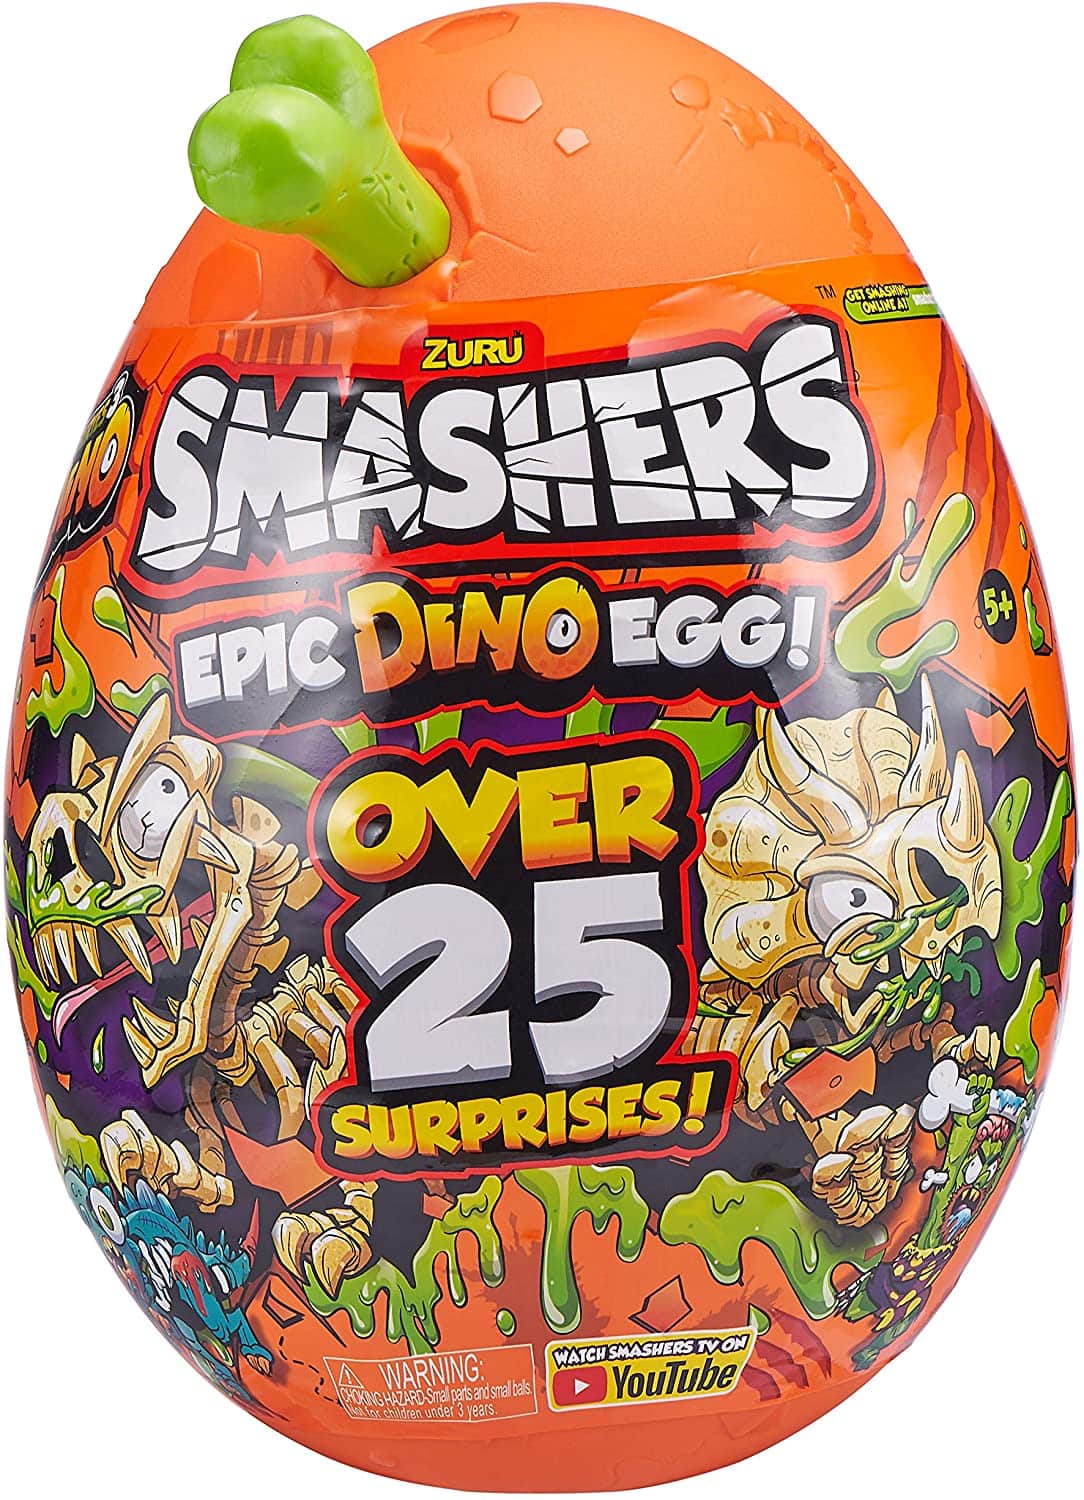 25 Easter Basket Stuffers For Kids